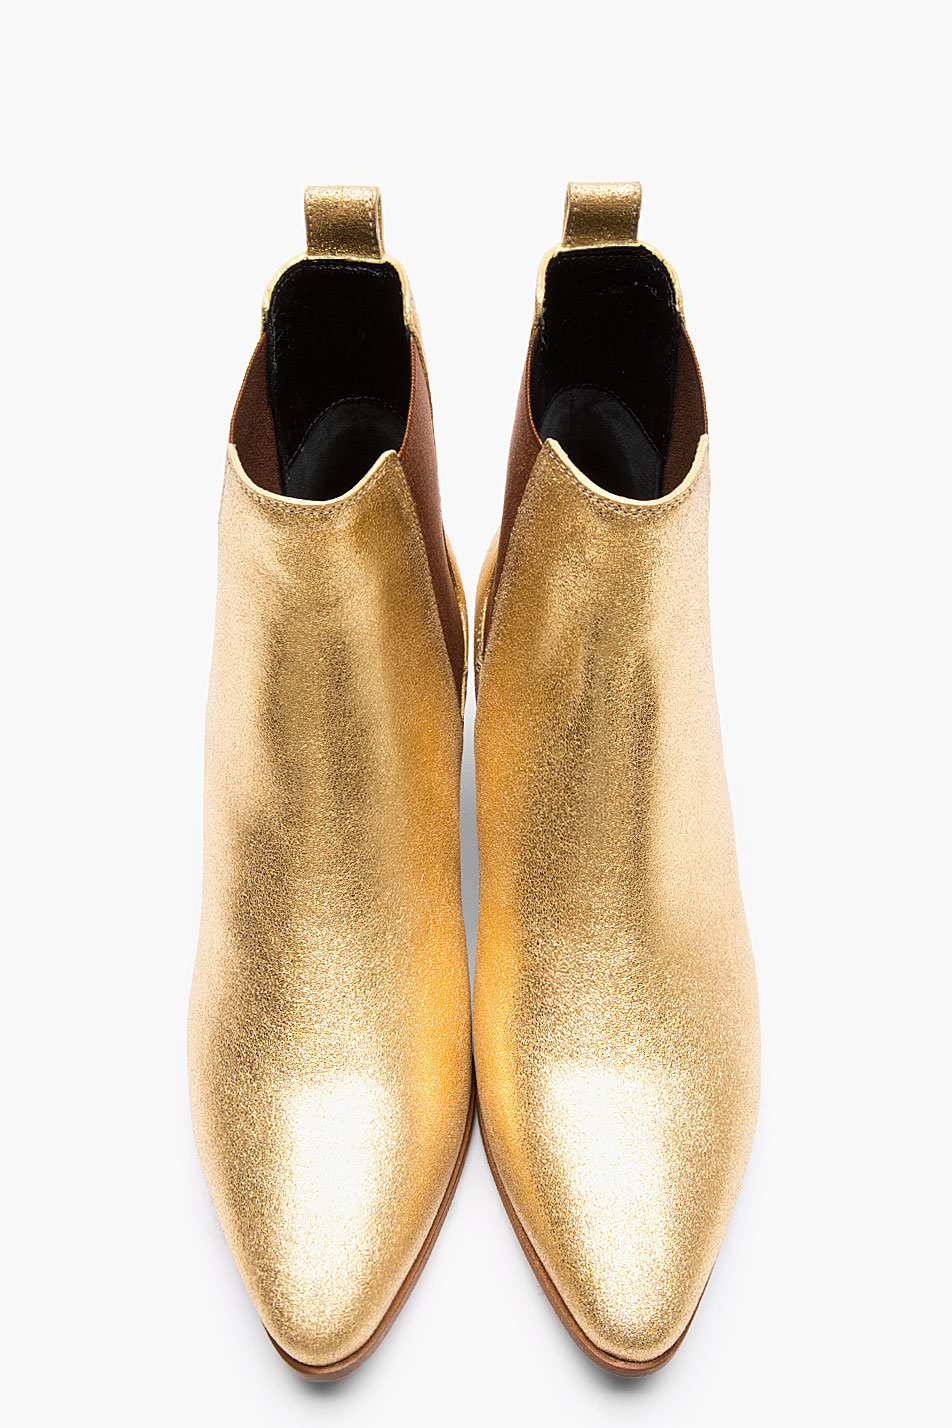 Saint Laurent Metallic Gold Leather Chelsea Ankle Boots - Lyst